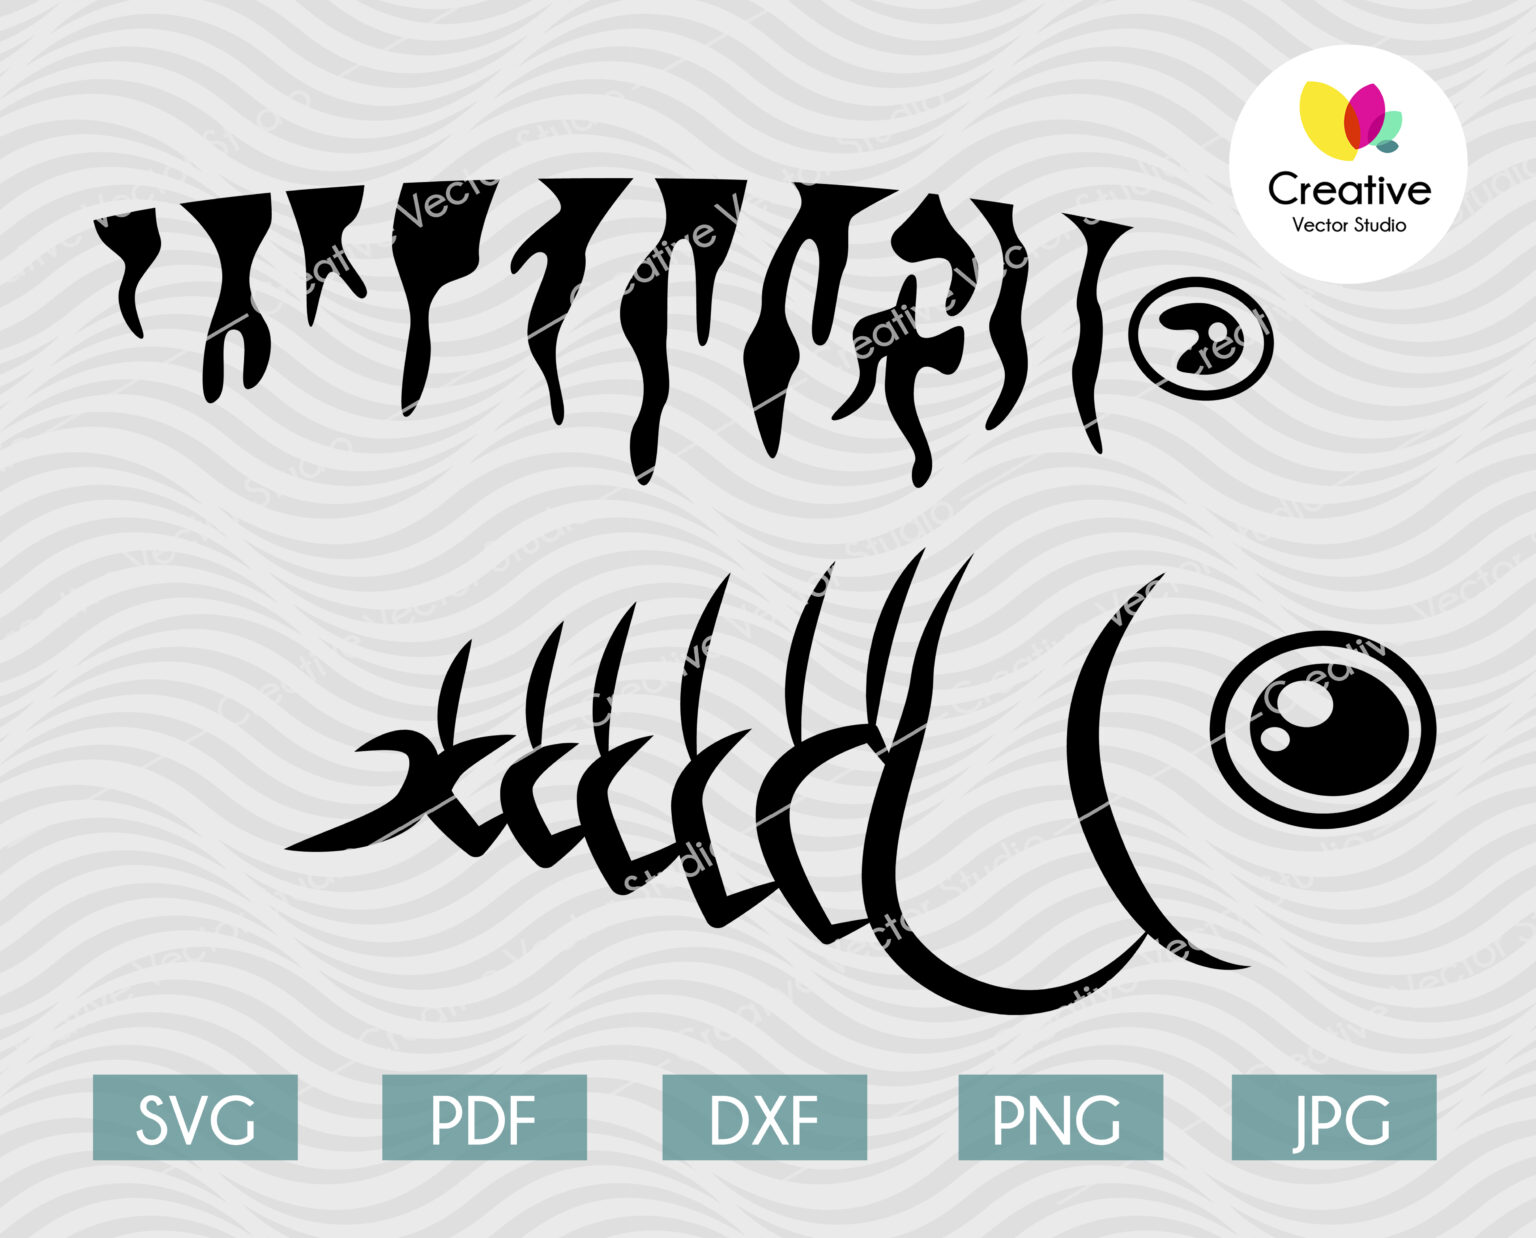 Download Fishing Lure SVG Bundle #2 | Creative Vector Studio